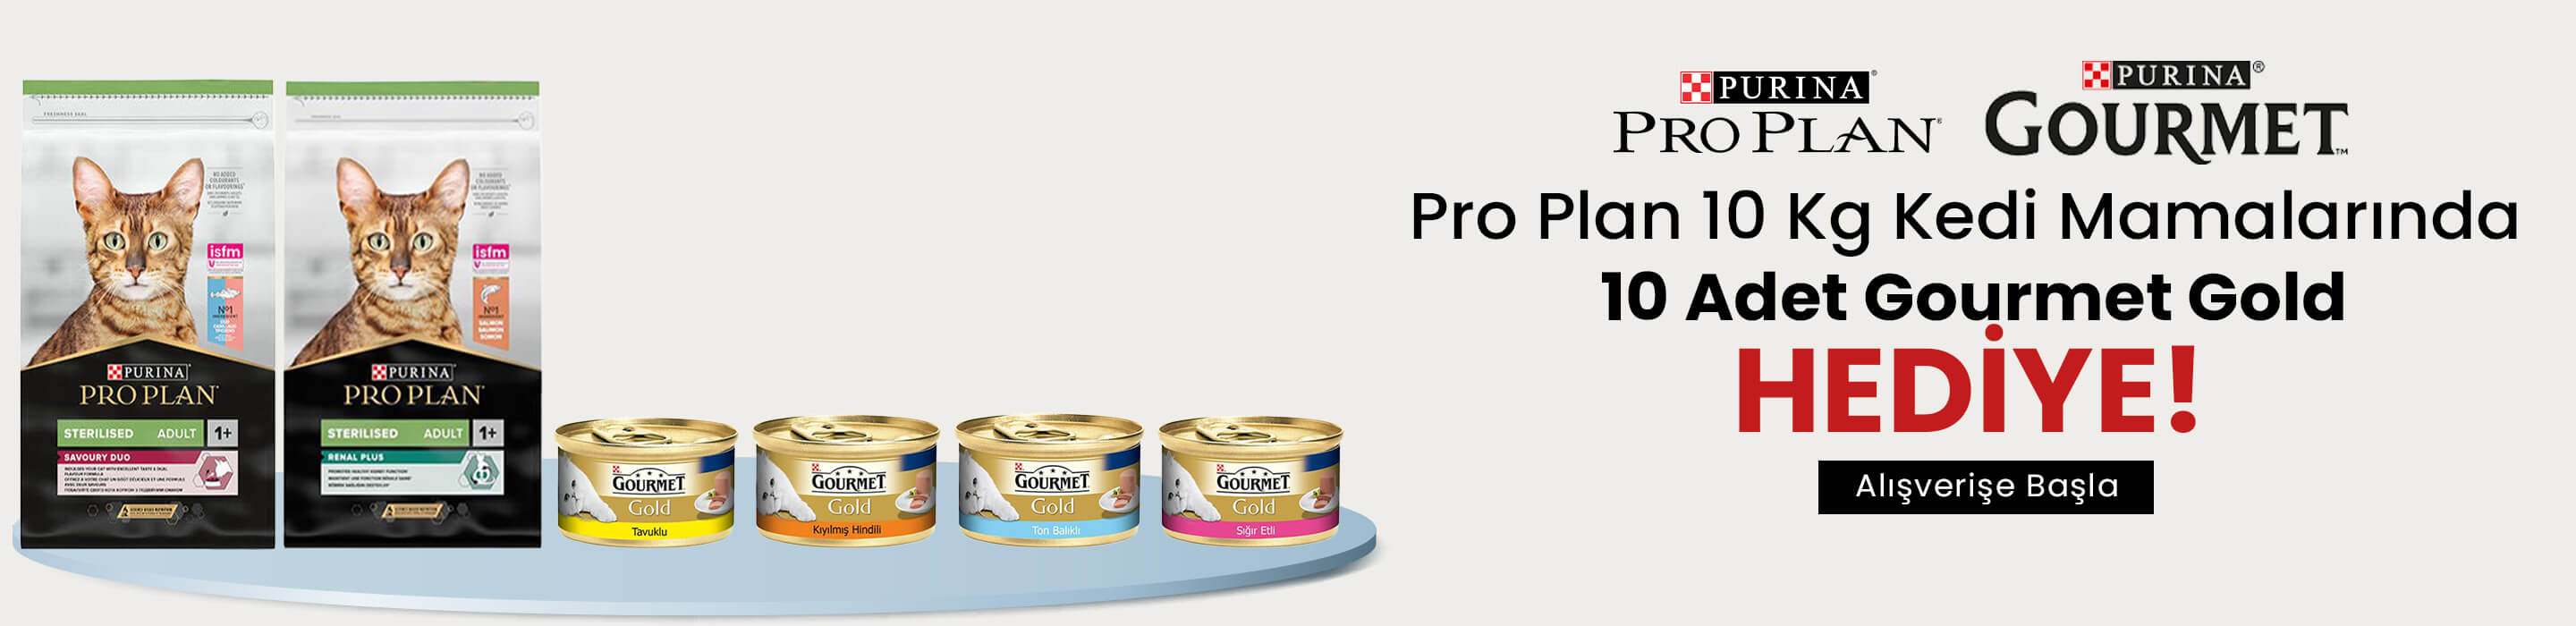 Pro Plan 10 Kg Kedi Mamalarında 10 Adet Gourmet Gold Hediye!